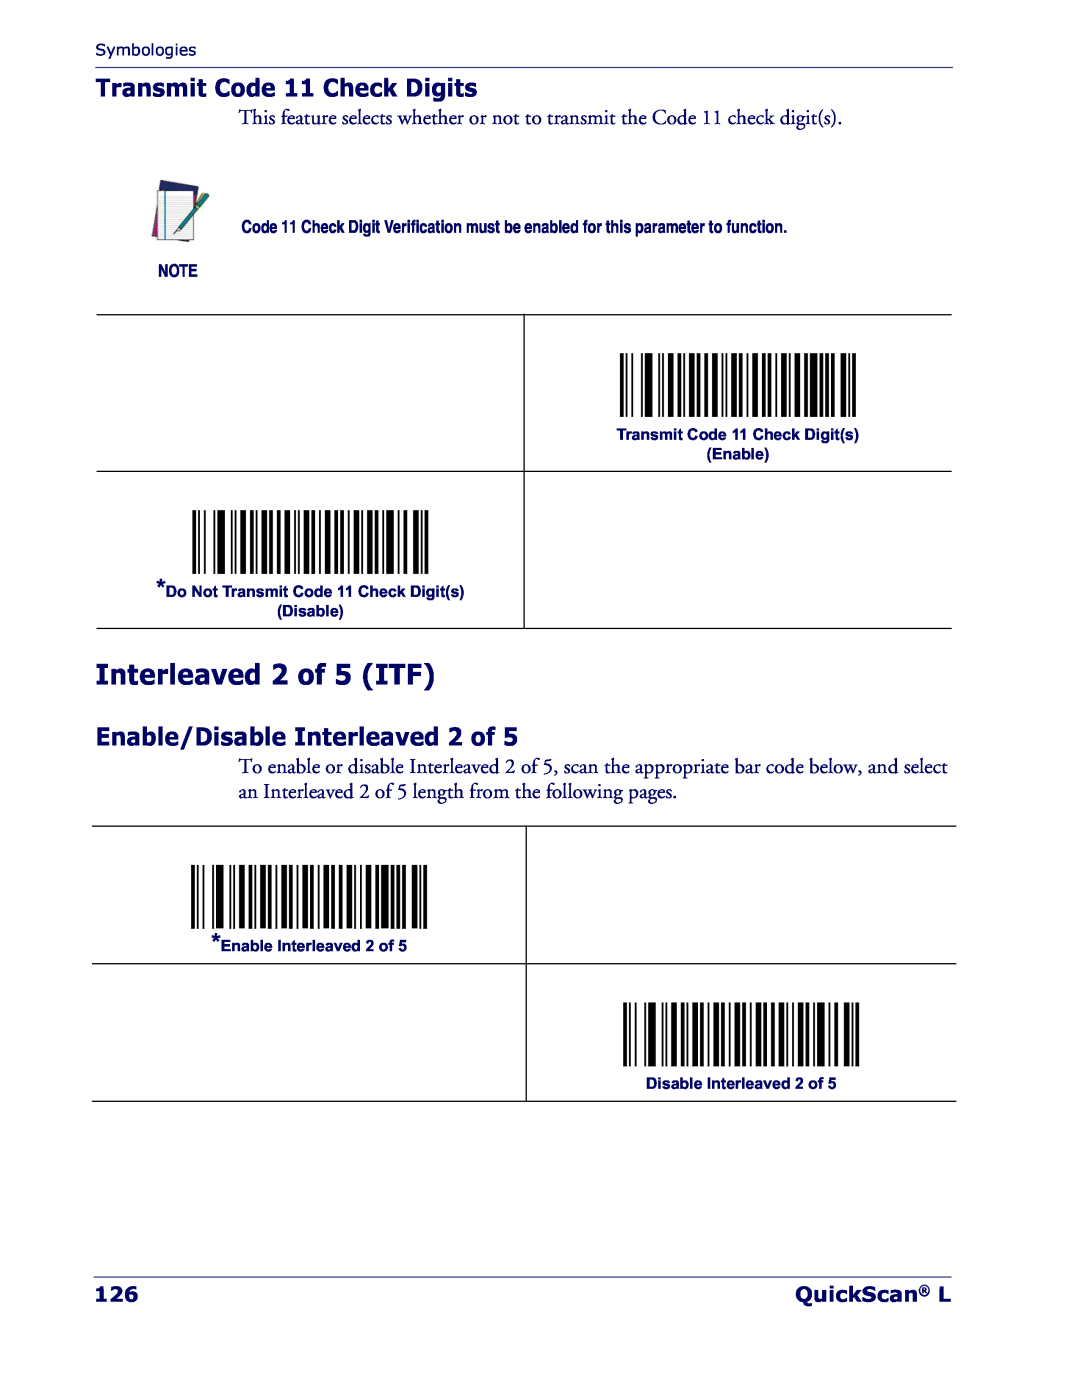 Datalogic Scanning QD 2300 manual Interleaved 2 of 5 ITF, Transmit Code 11 Check Digits, Enable/Disable Interleaved 2 of 